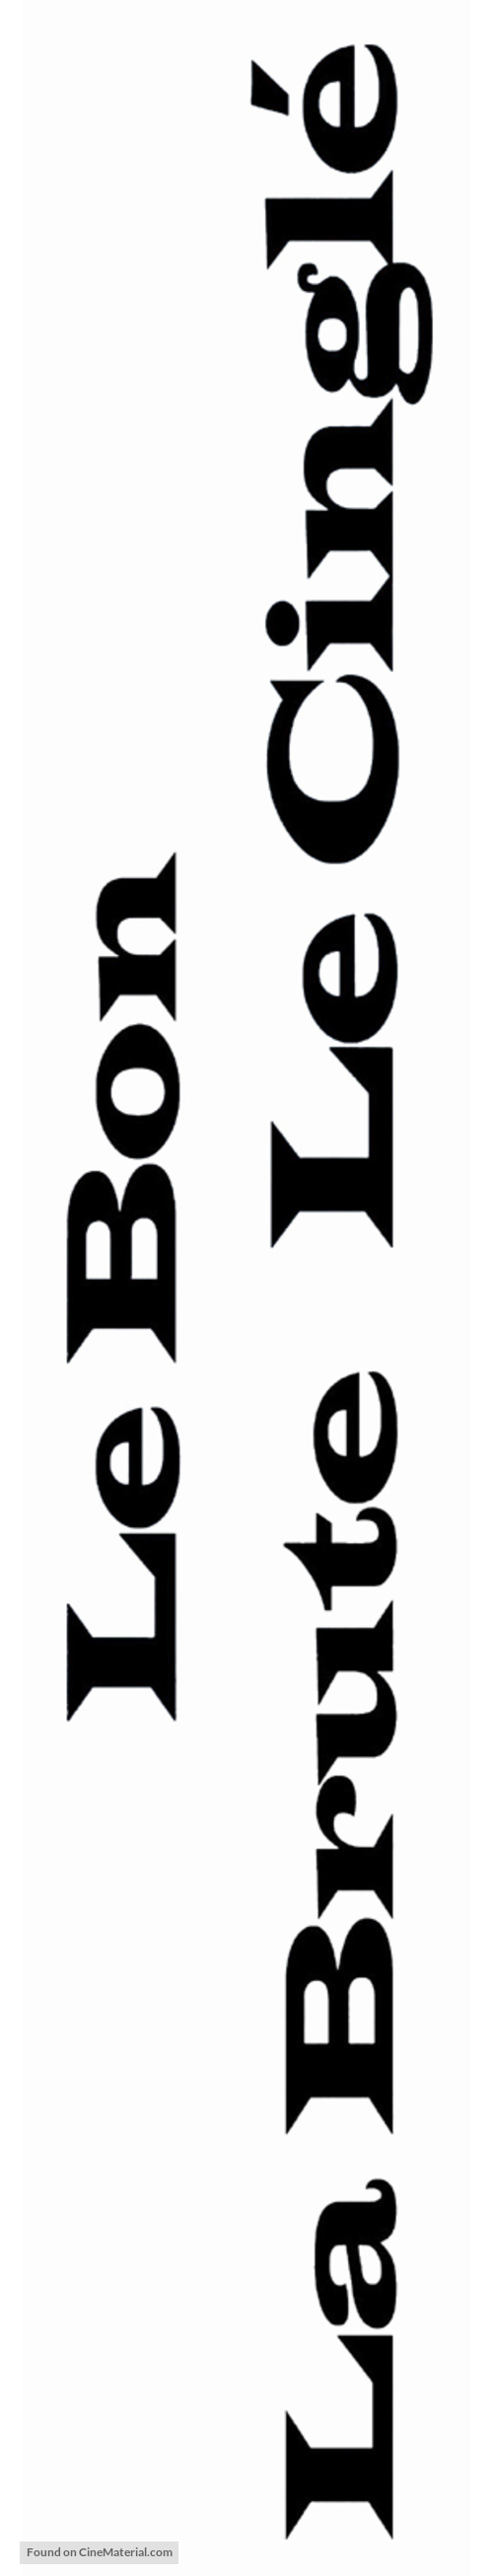 Joheunnom nabbeunnom isanghannom - French Logo